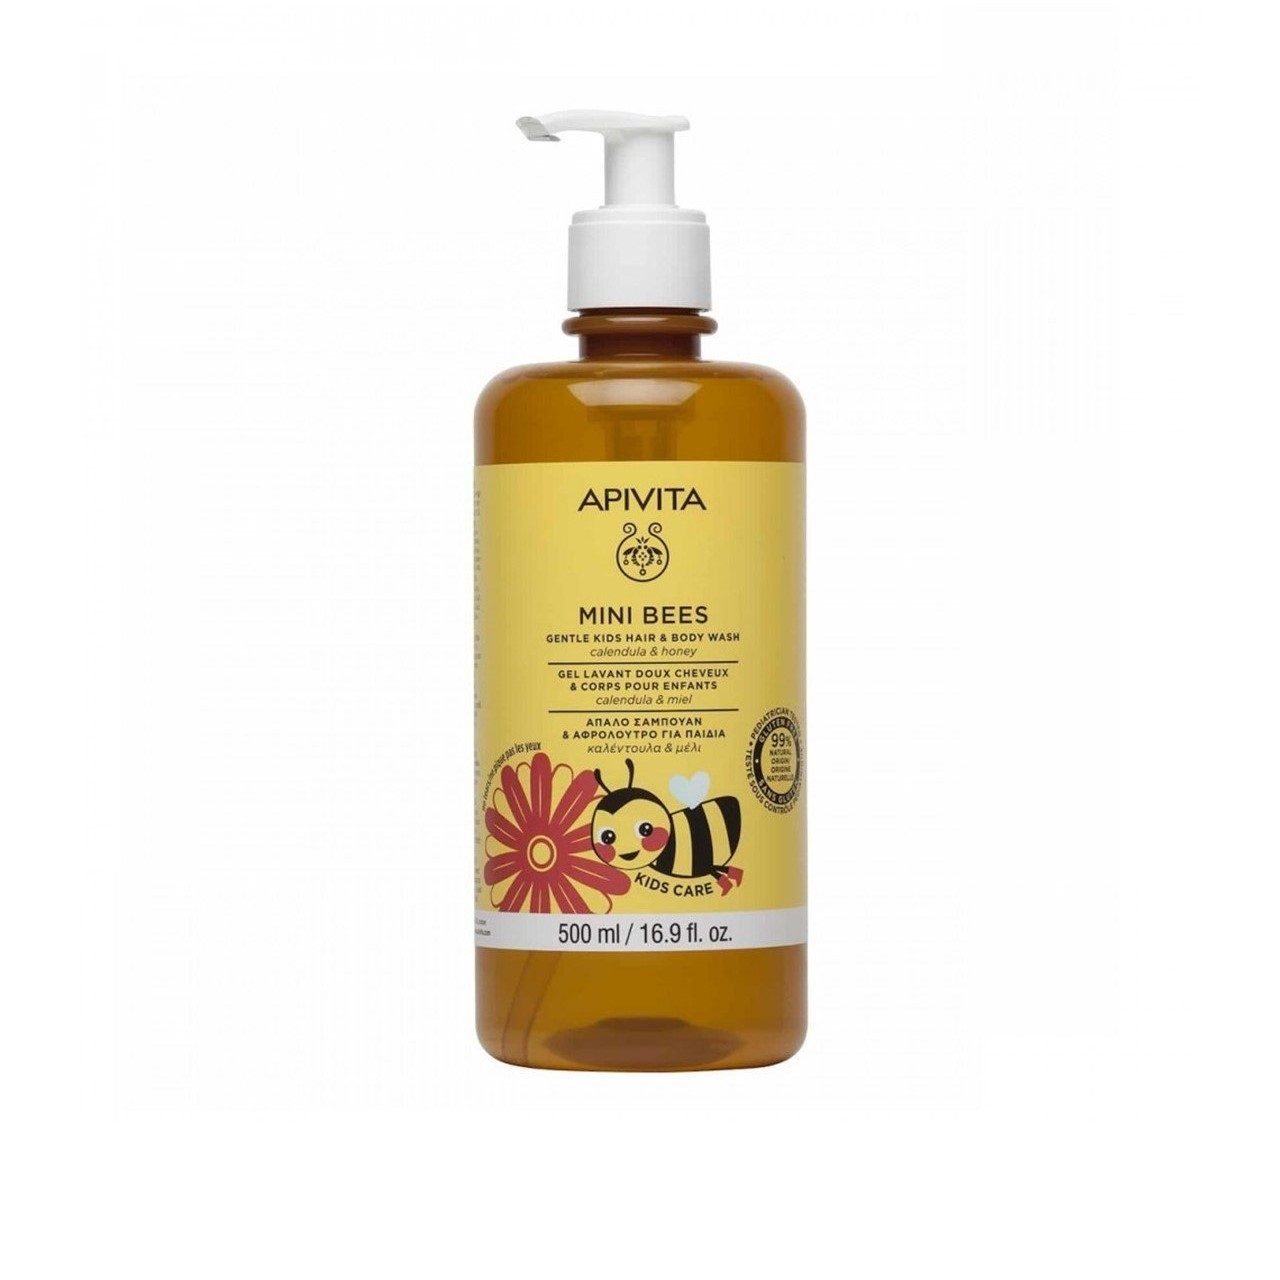 APIVITA Mini Bees Gentle Kids Hair & Body Wash Calendula & Honey 500ml (16.9 fl oz)